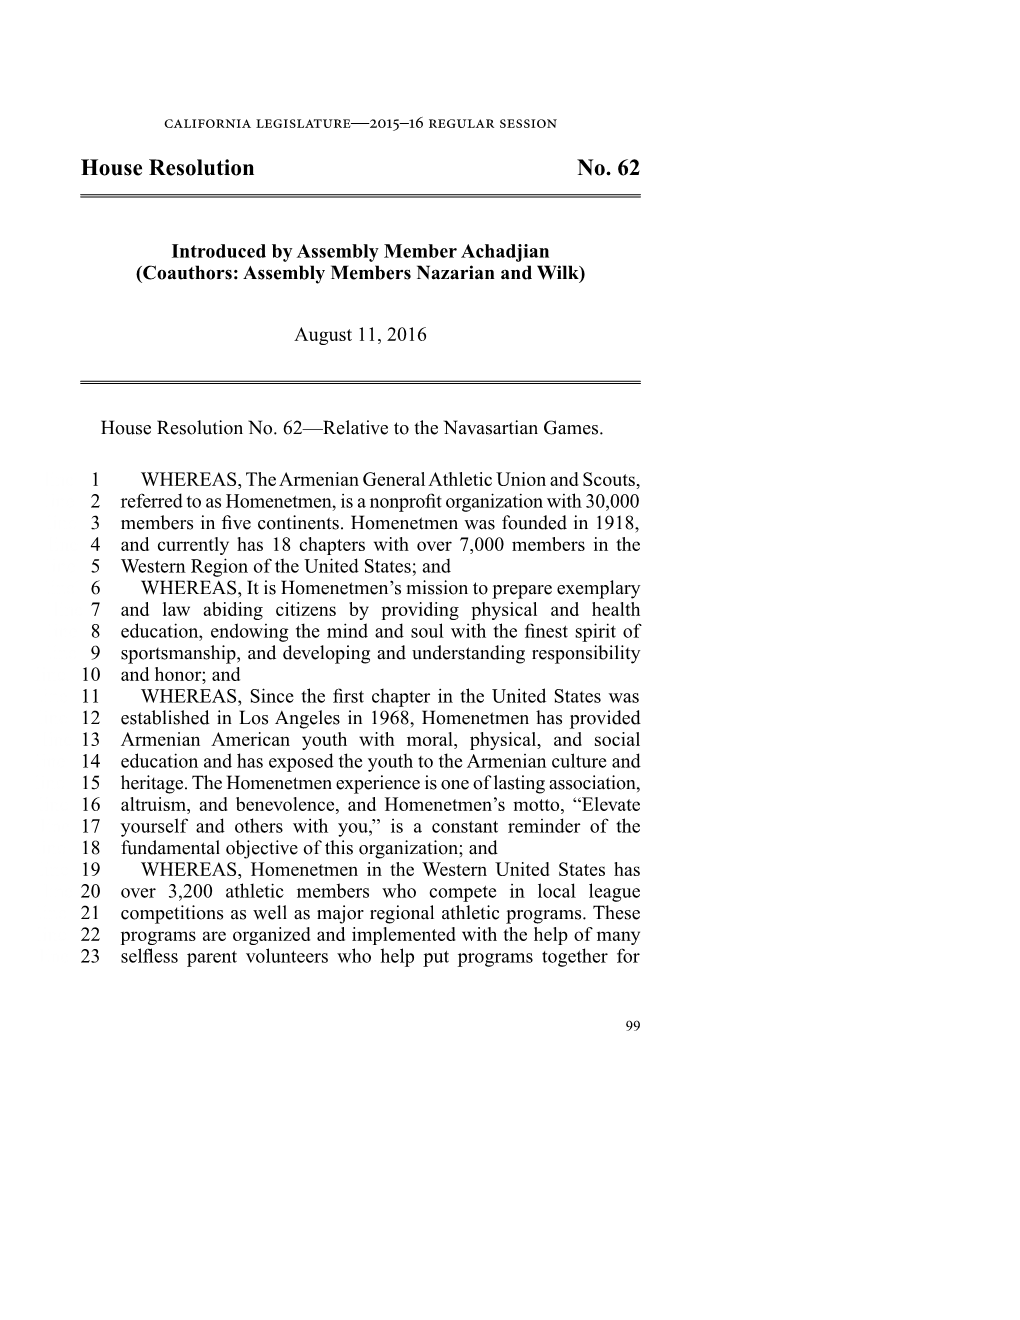 House Resolution No. 62